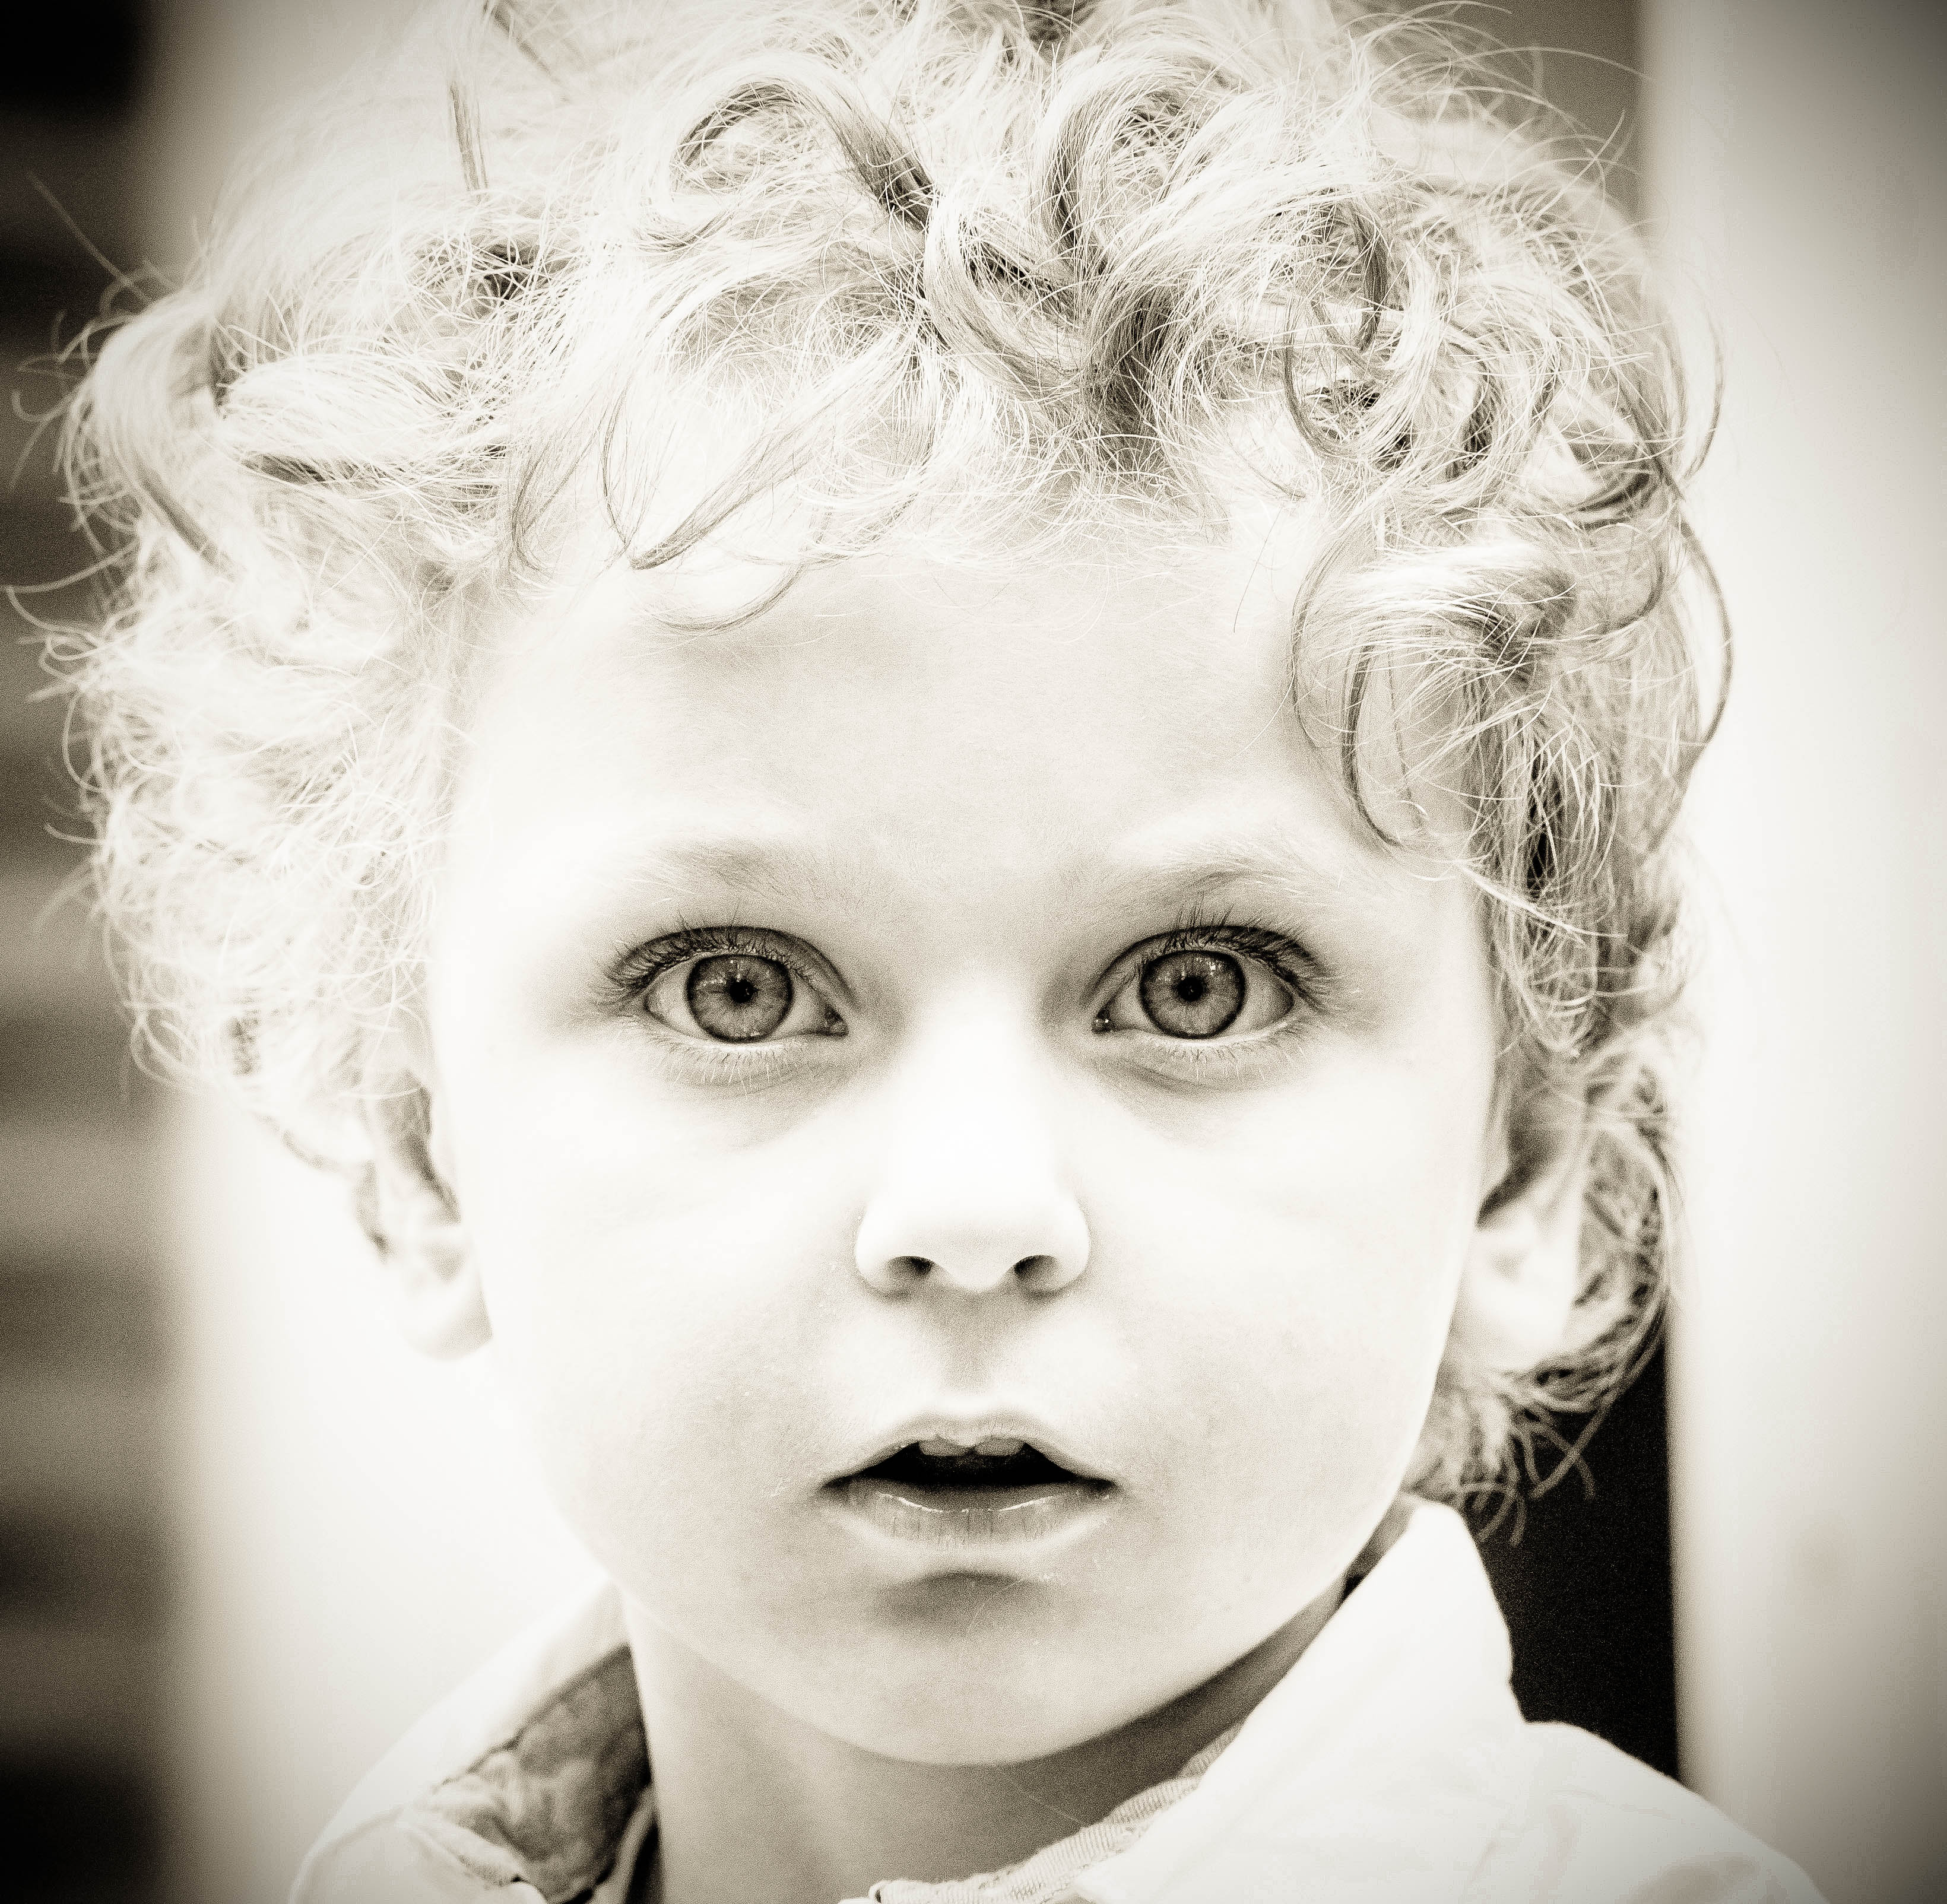 #boy #child #happy #childhood #bestpic #portrait #kids #colors #eyes #love #germany #bremen, Lina Kozi